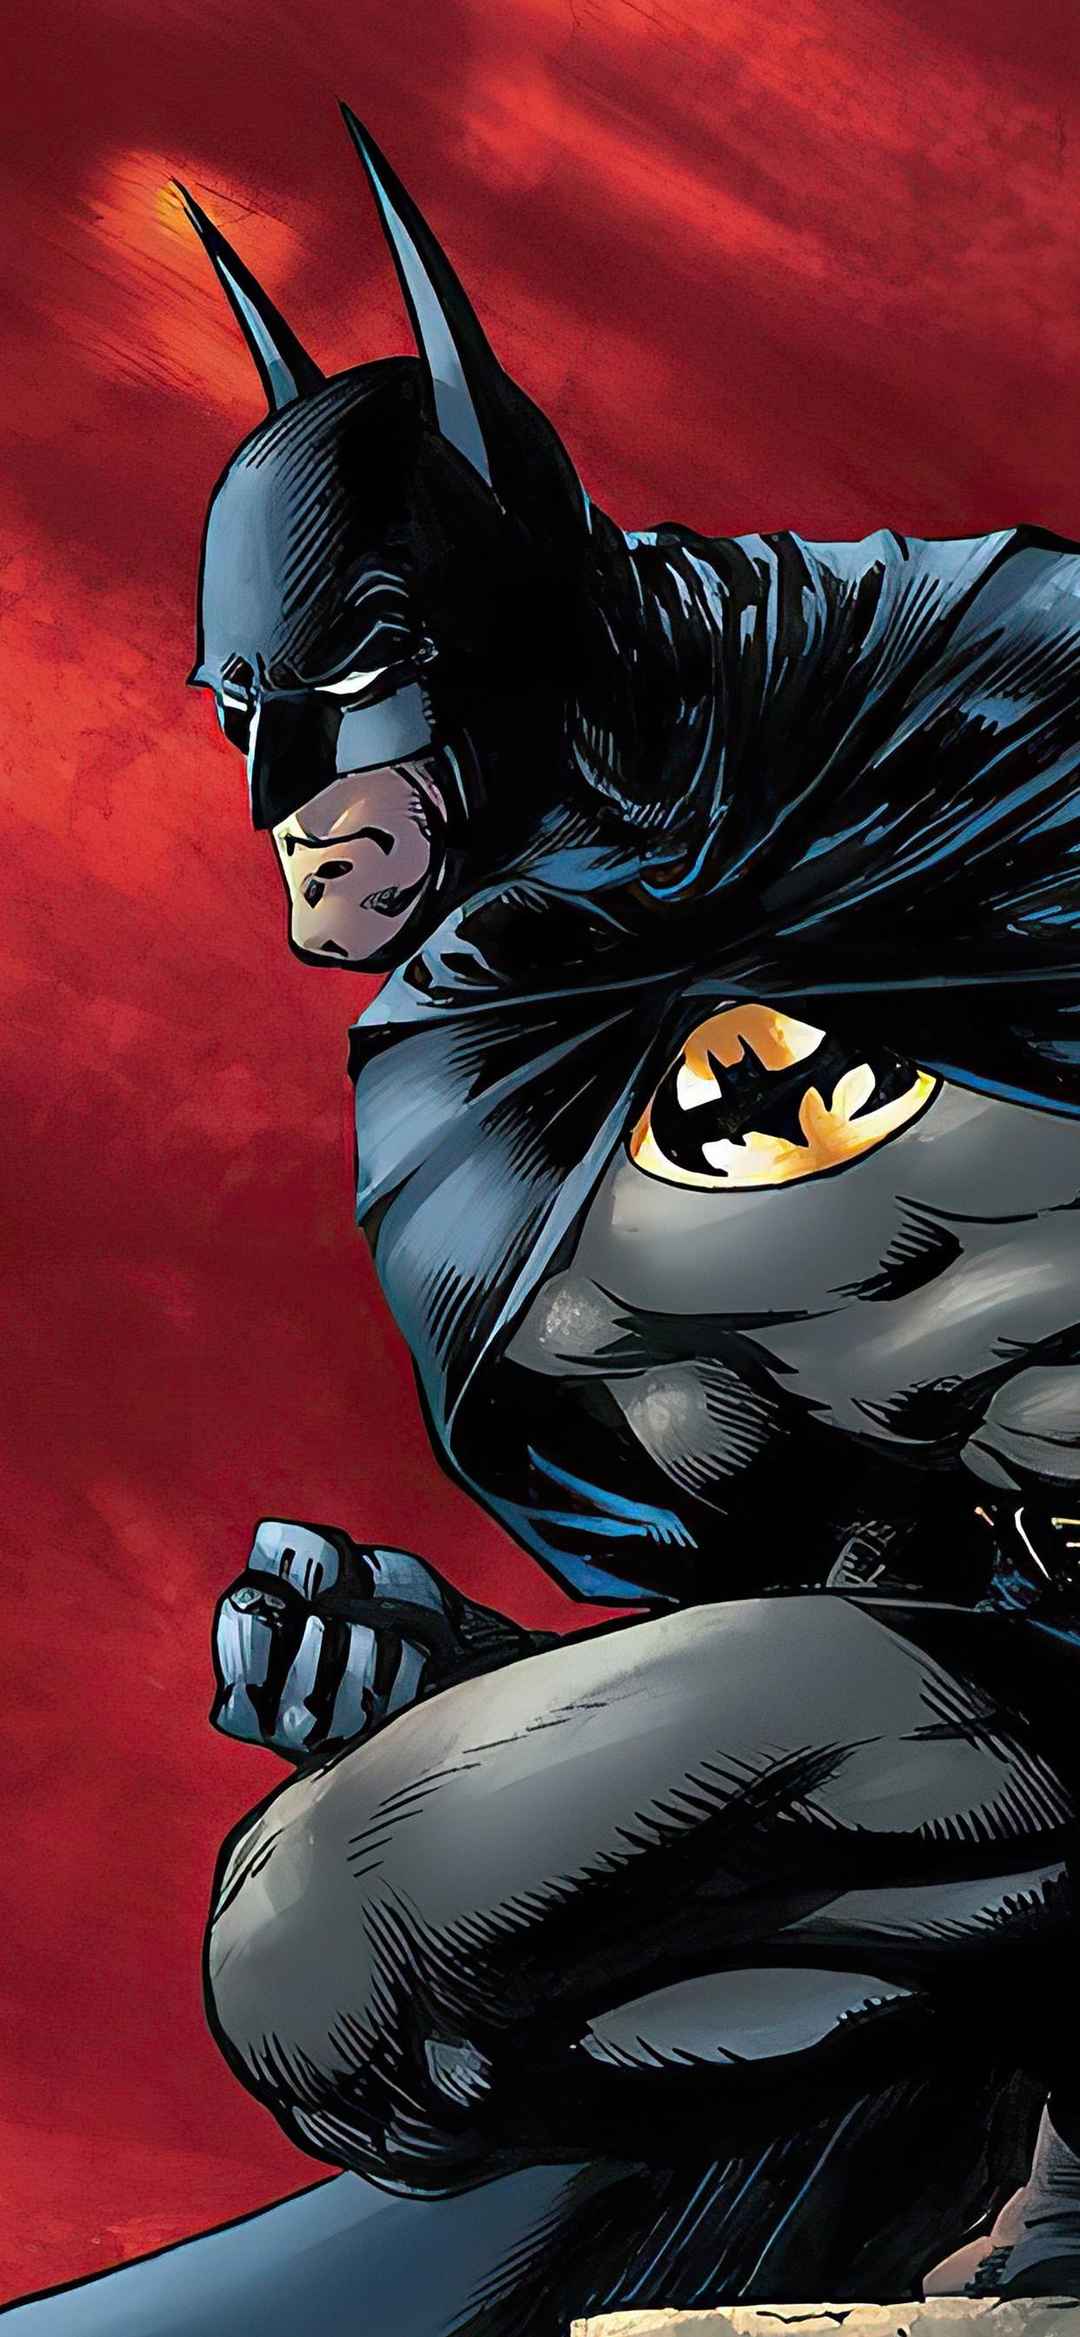 DC超级英雄蝙蝠侠好看又个性的壁纸图片-